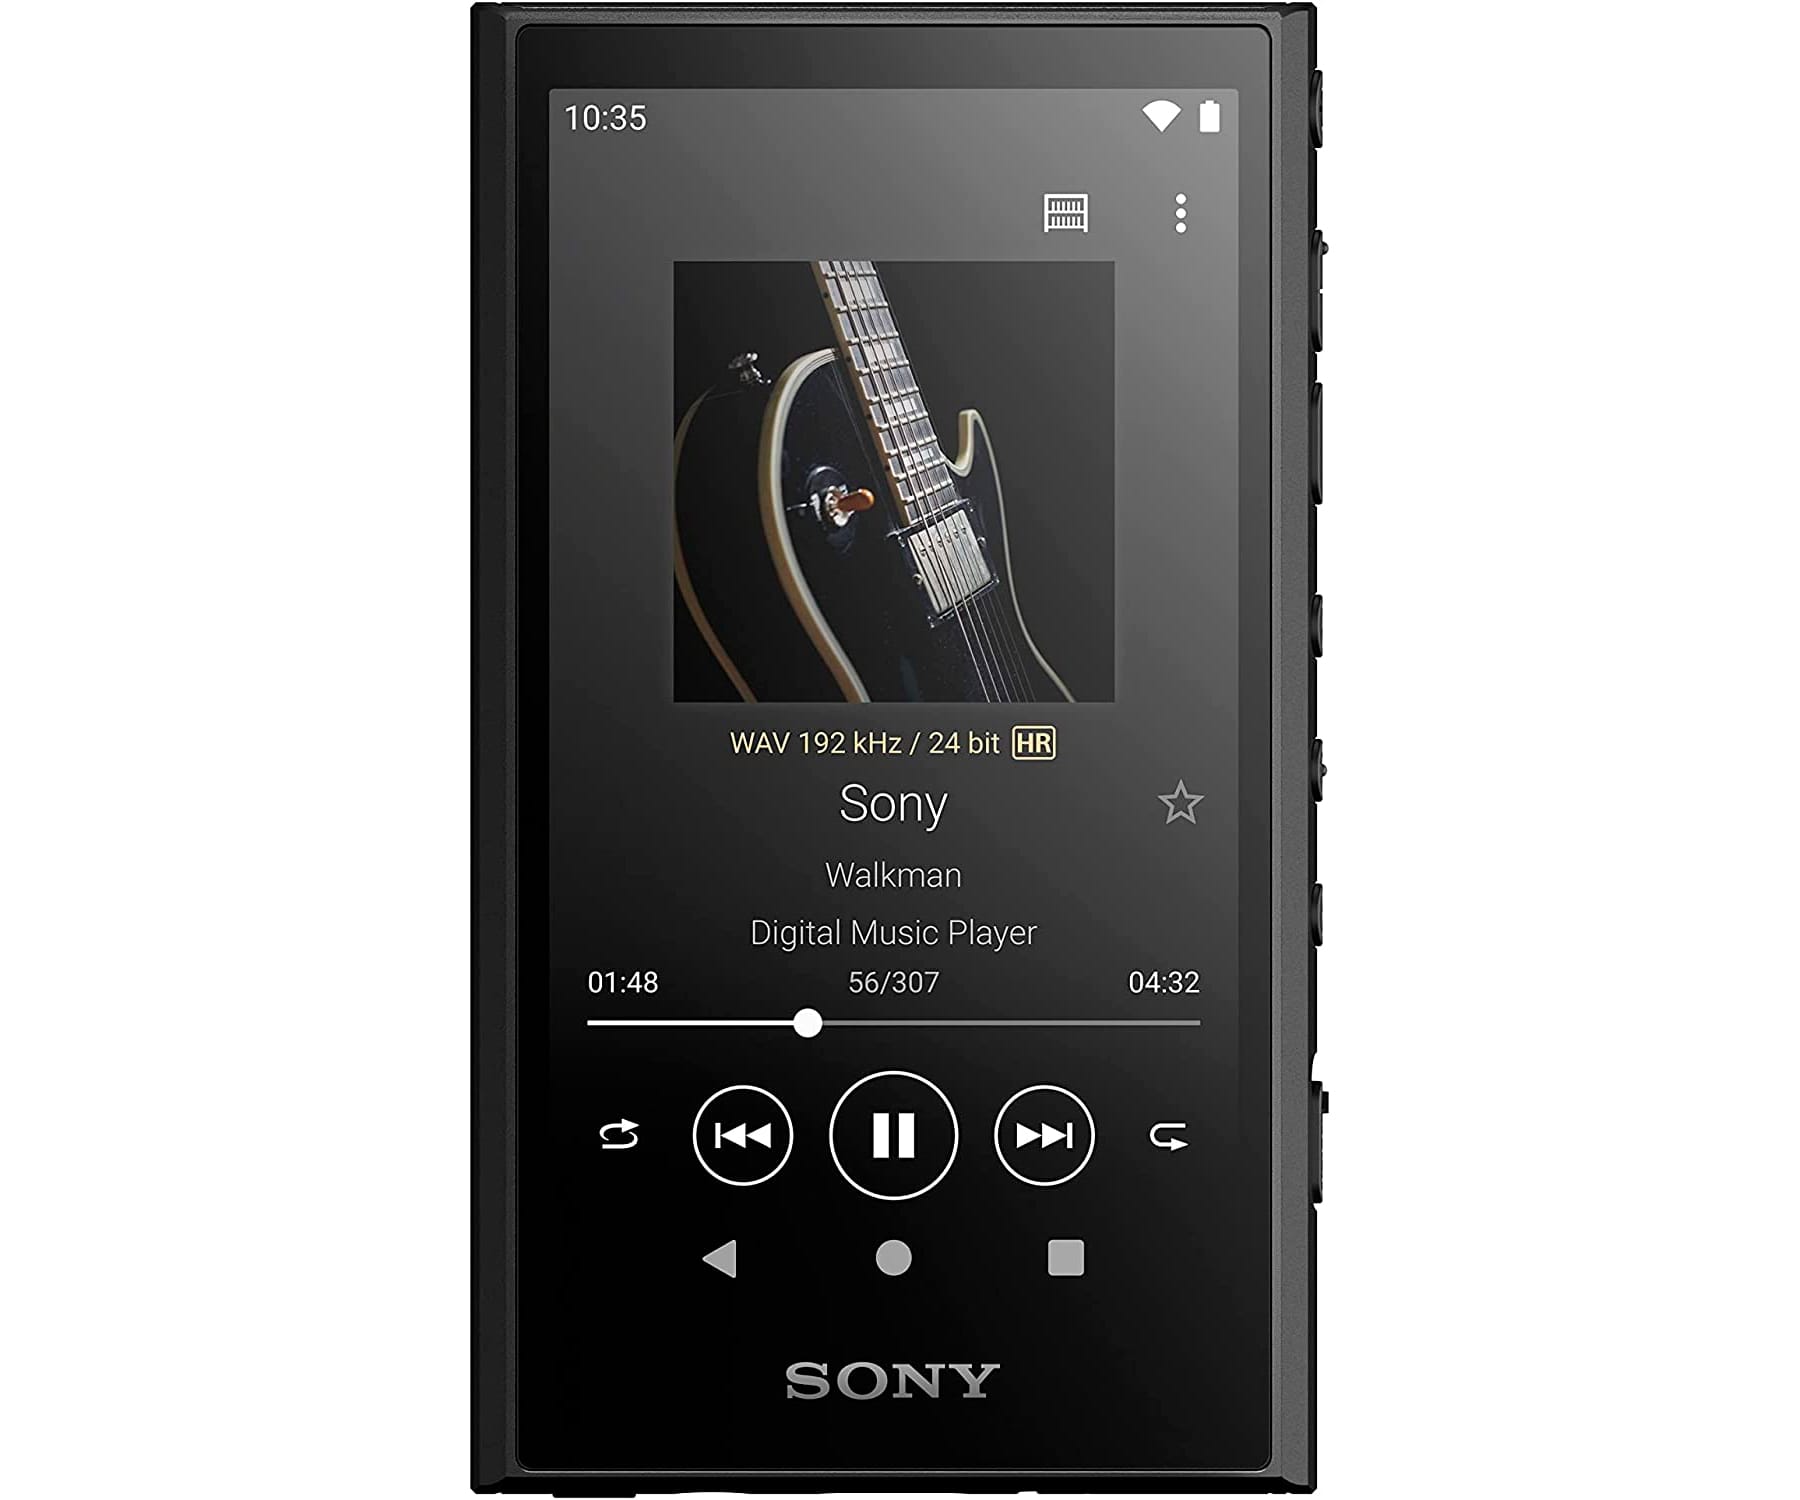 SONY NW-A306 WALKMAN Black / Reproductor MP3 de 32GB